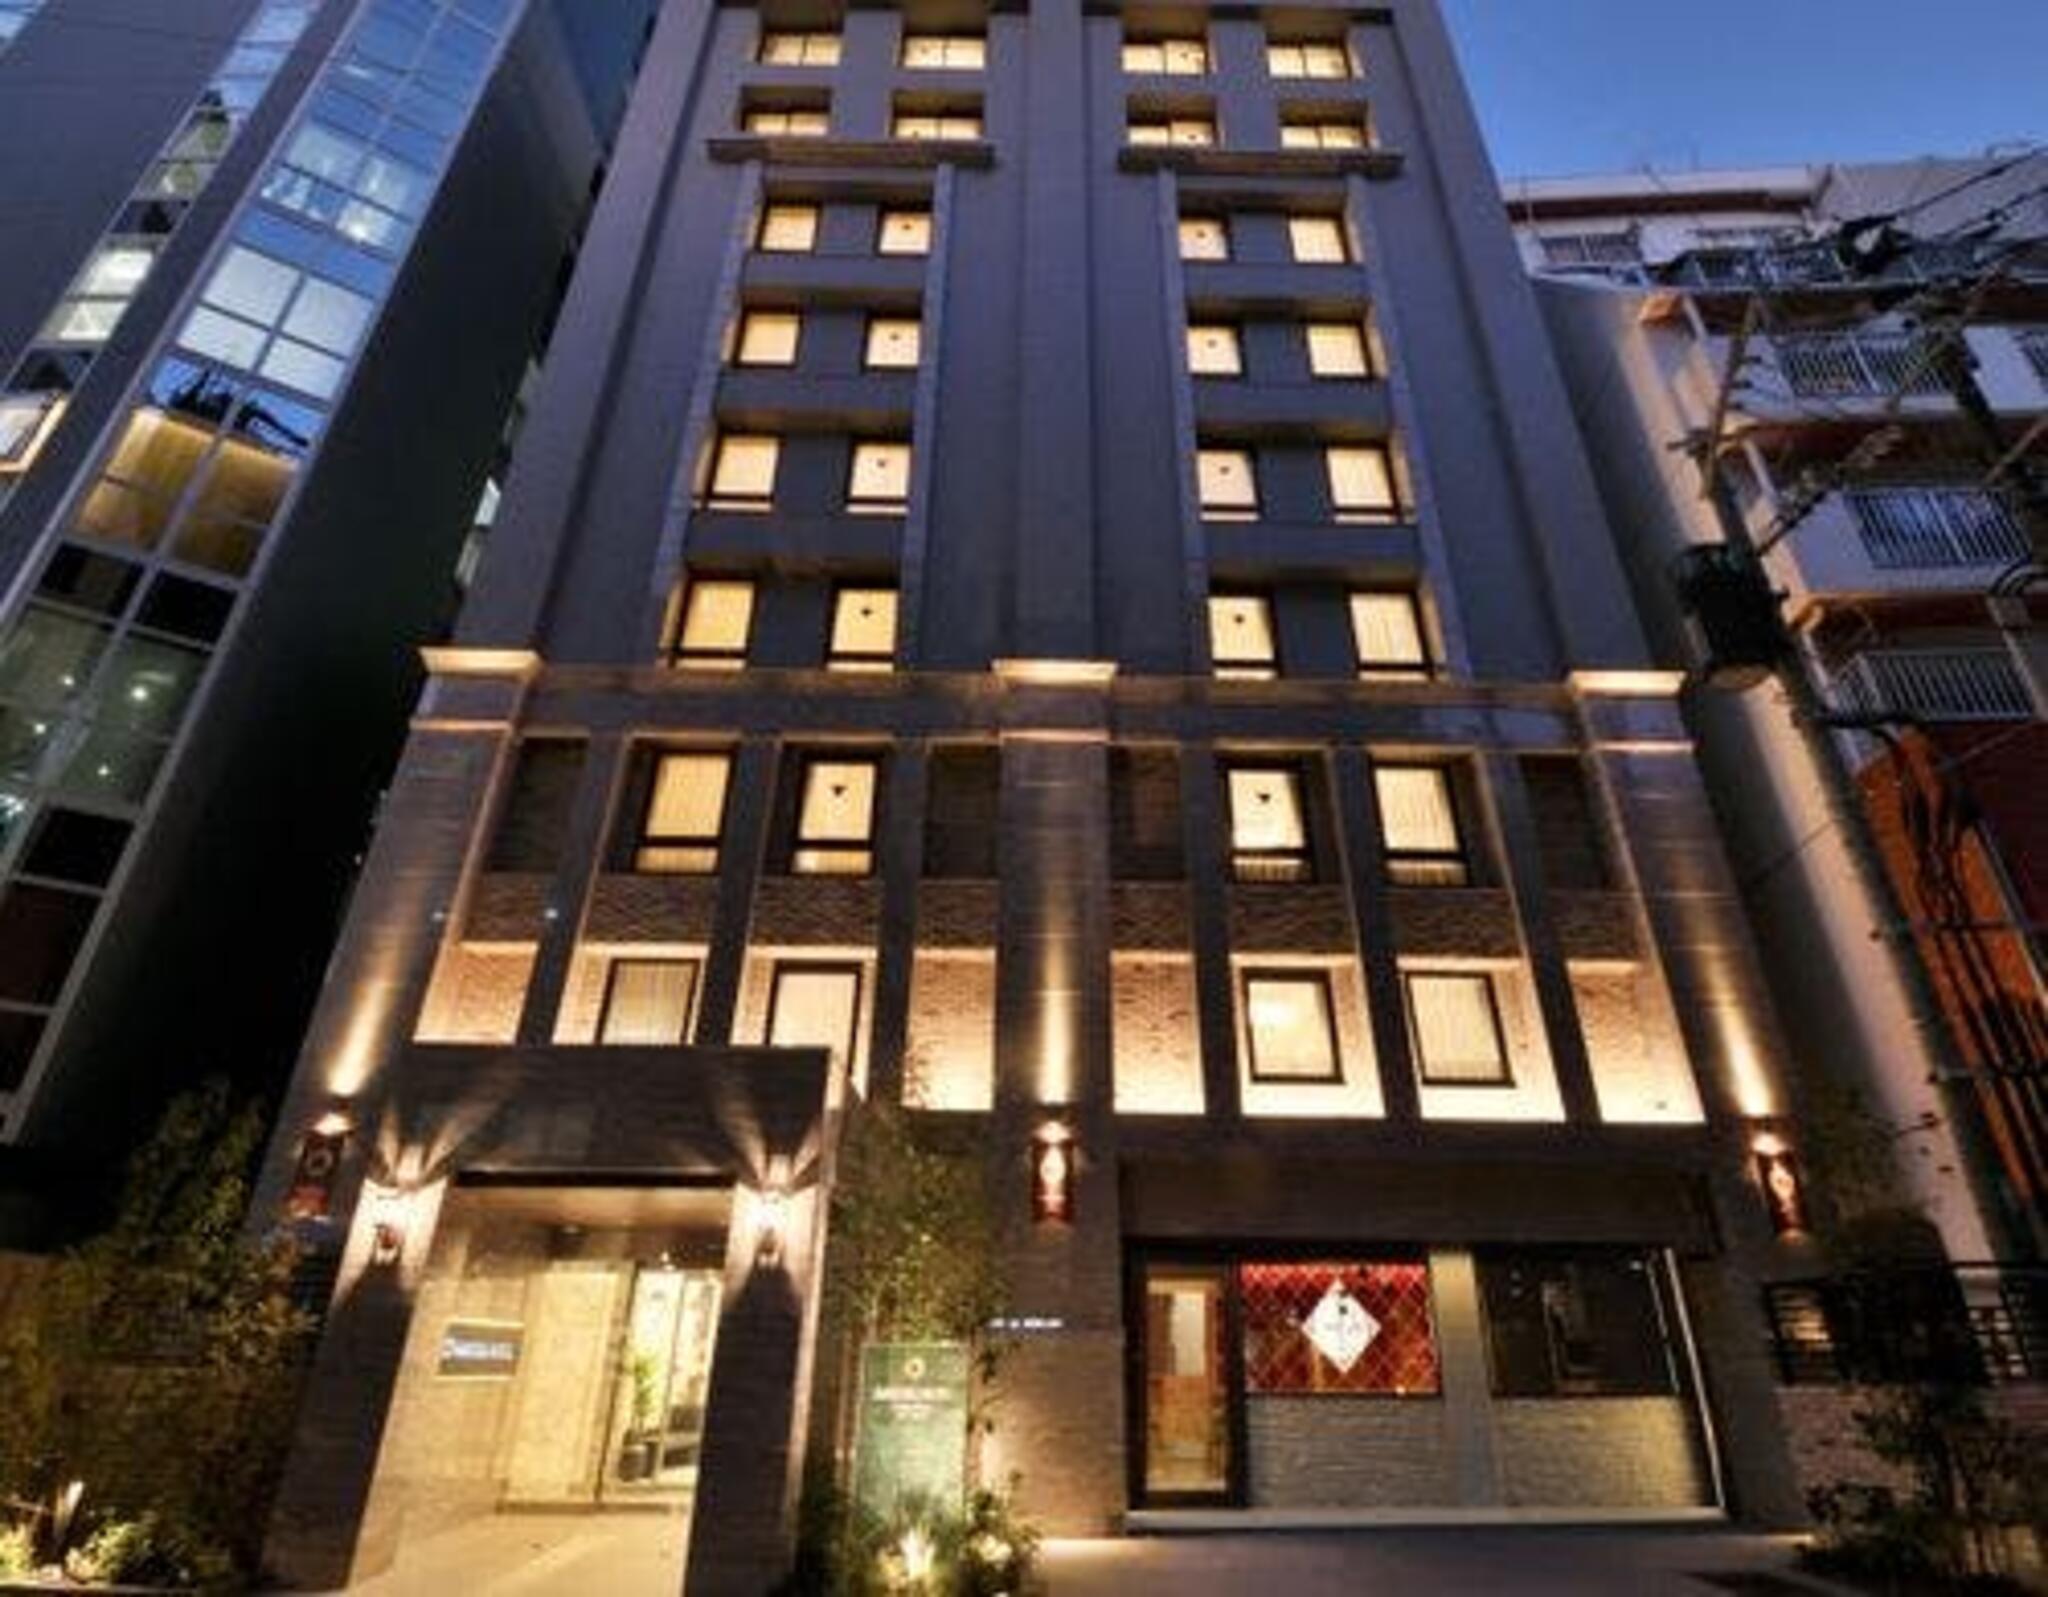 AMISTAD HOTEL FUKUOKA(アミスタホテル福岡)の代表写真1